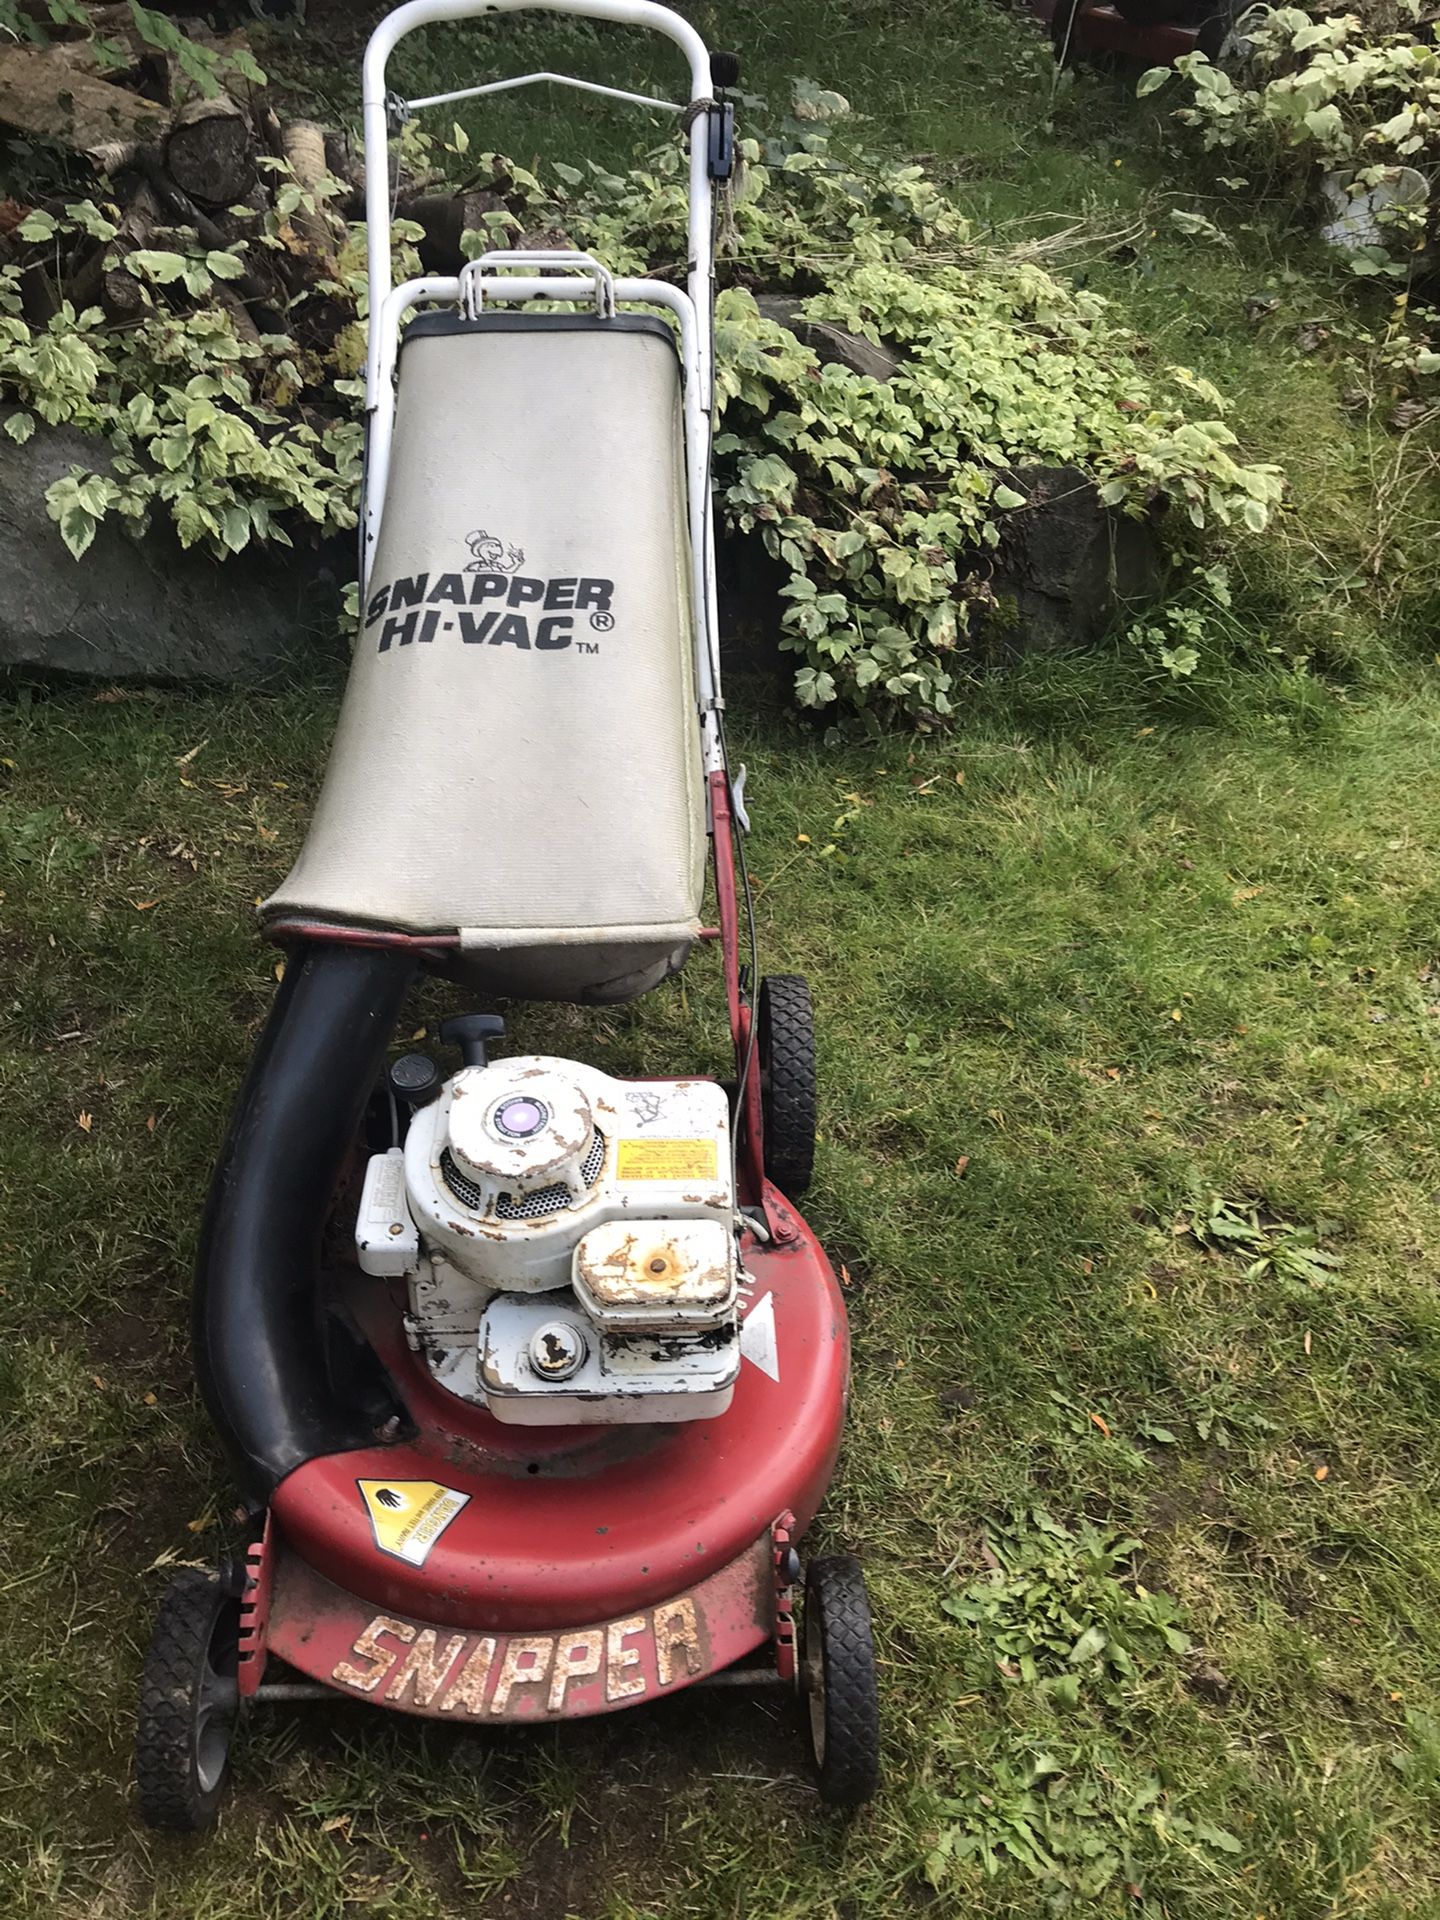 21” snapper hi vac gas push lawn mower w/bag